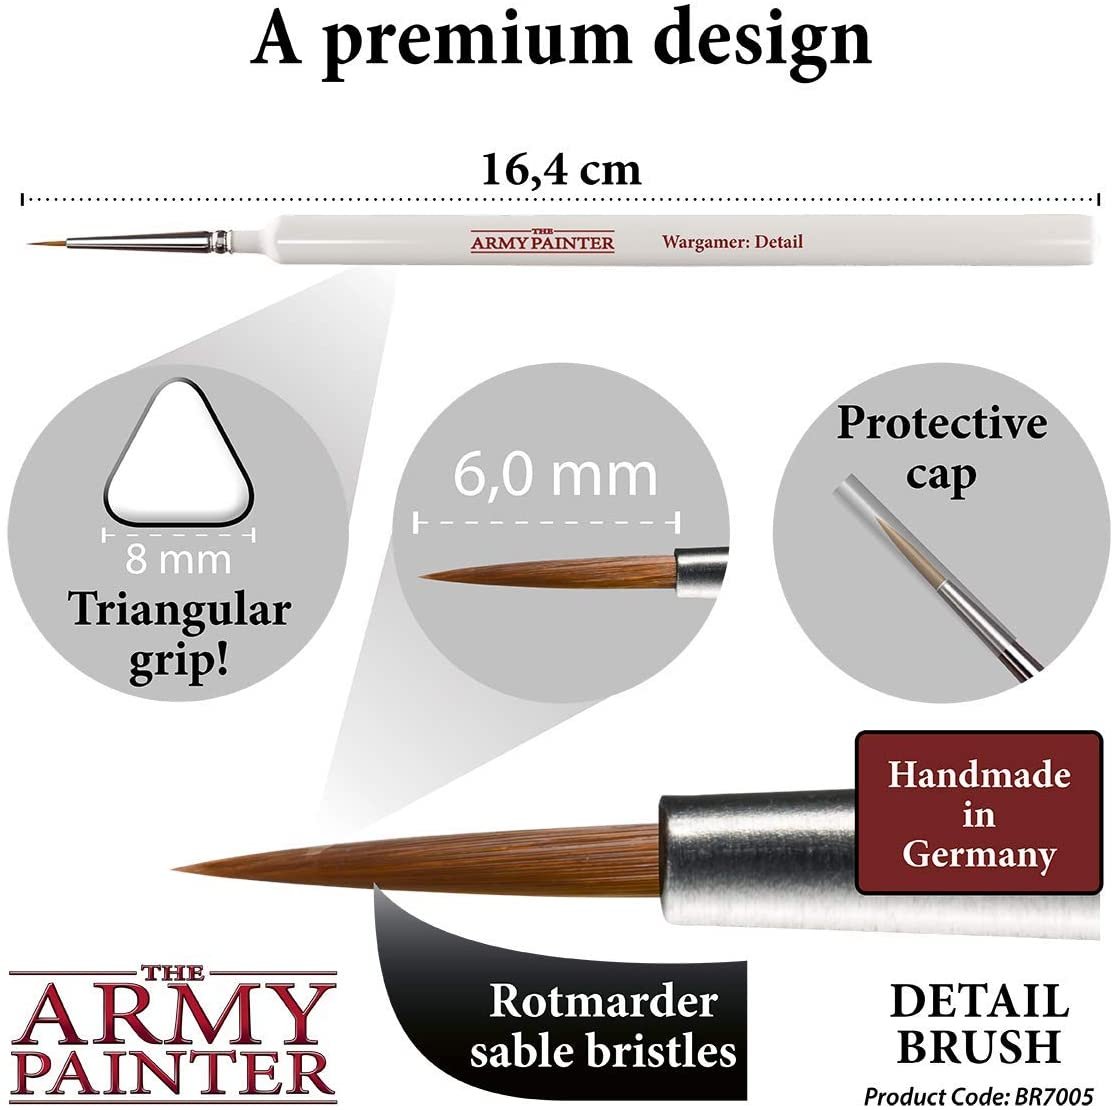 The Army Painter - Wargamer Brush: Detail Brush